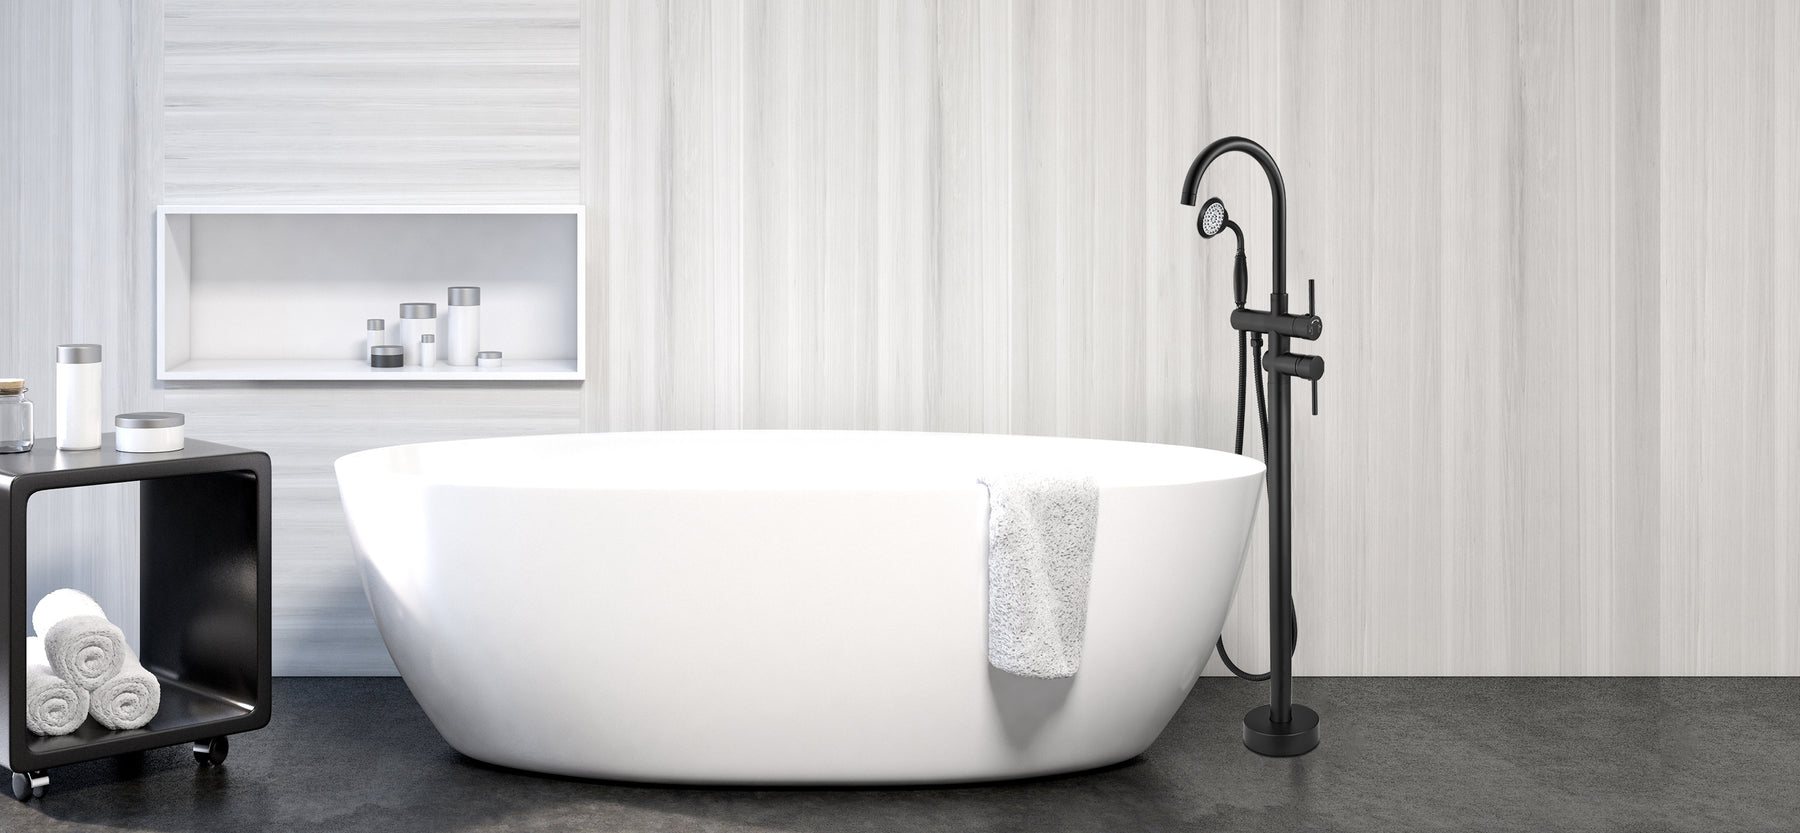 Black Freestanding Bathtub Faucet Tub Filler with Ceramic Hand Held Shower Floor-Mount High Flow Brass Bathtub Faucet with Hand Sprayer